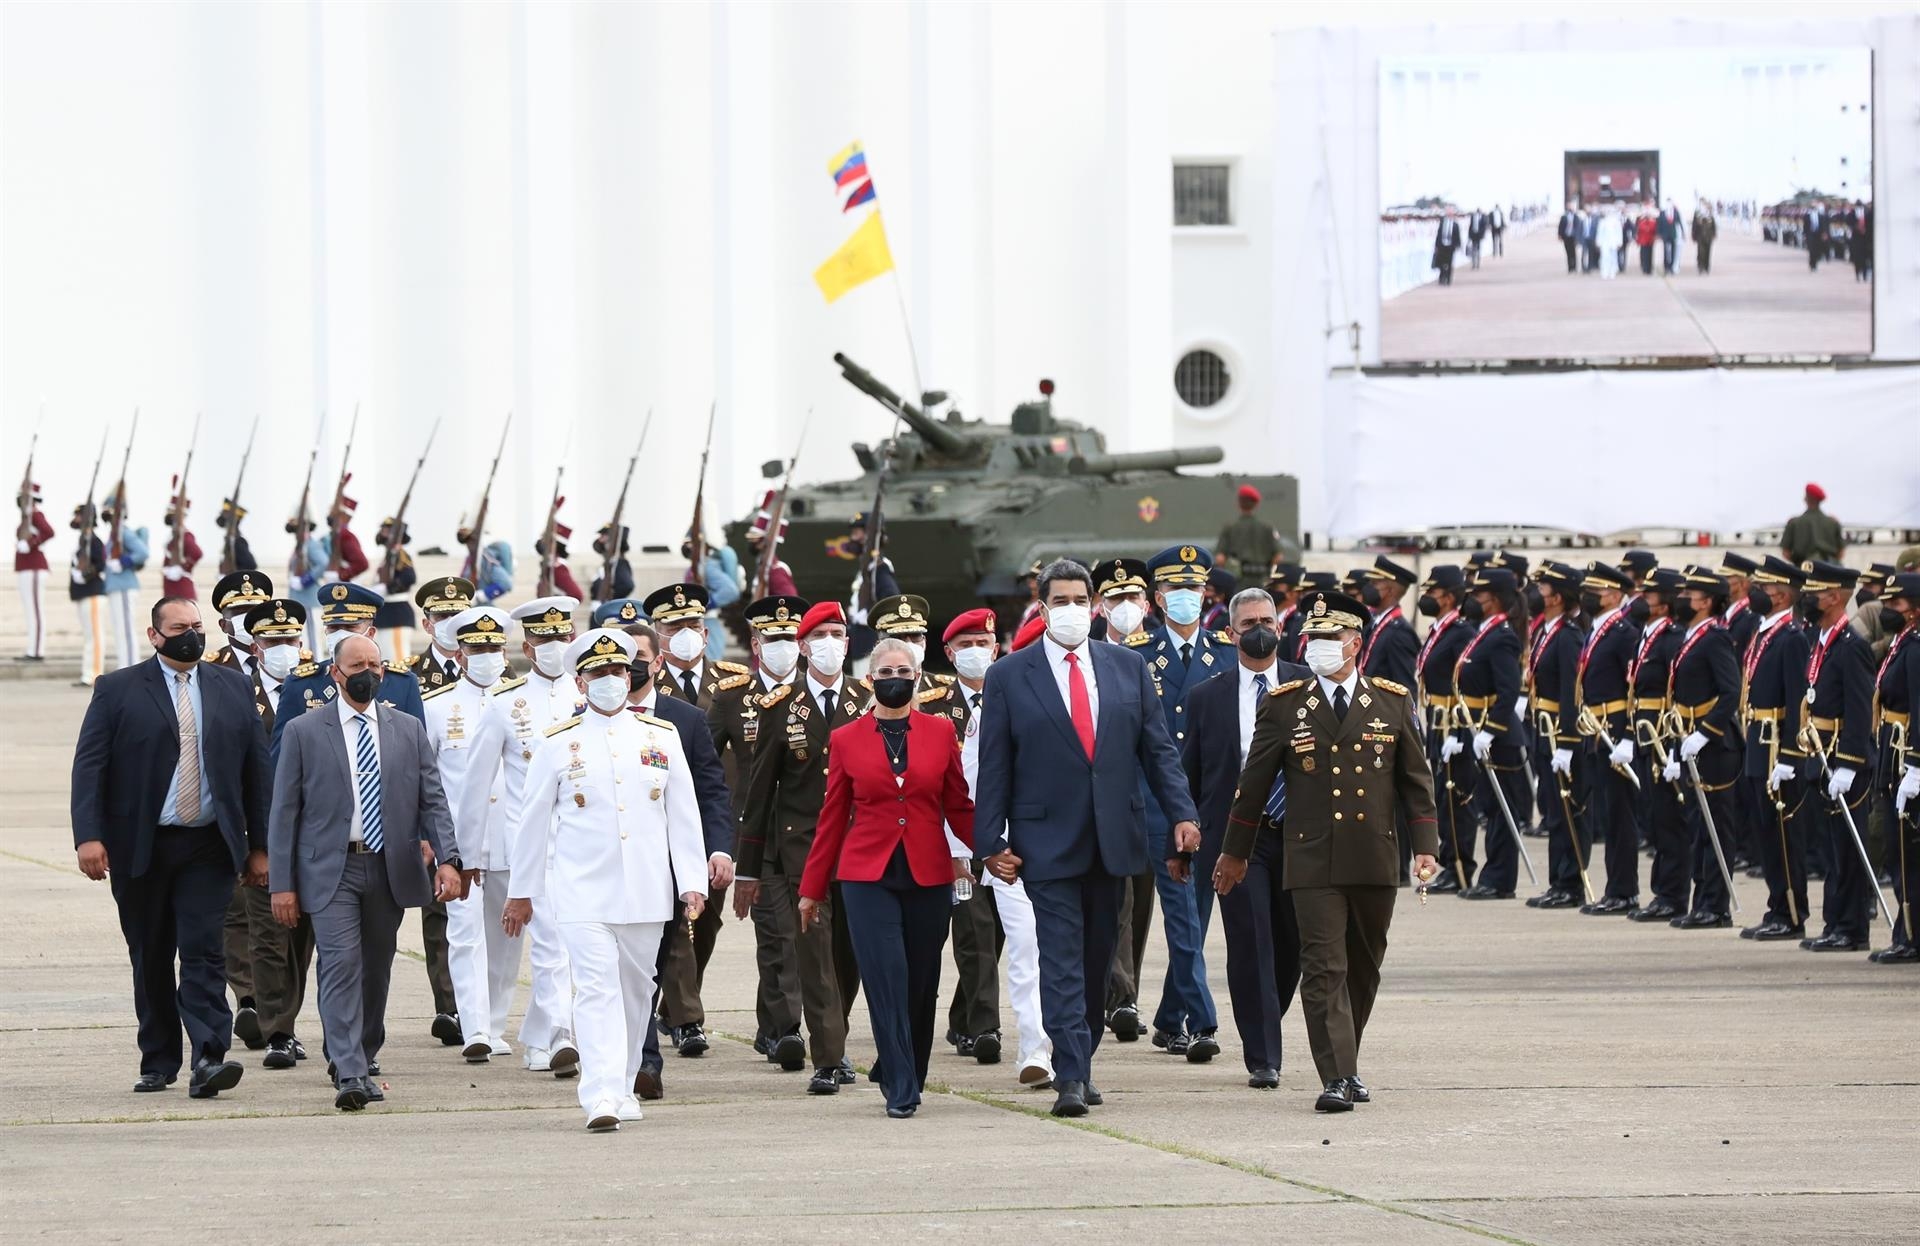 Maduro renovó cúpula militar - noticiacn